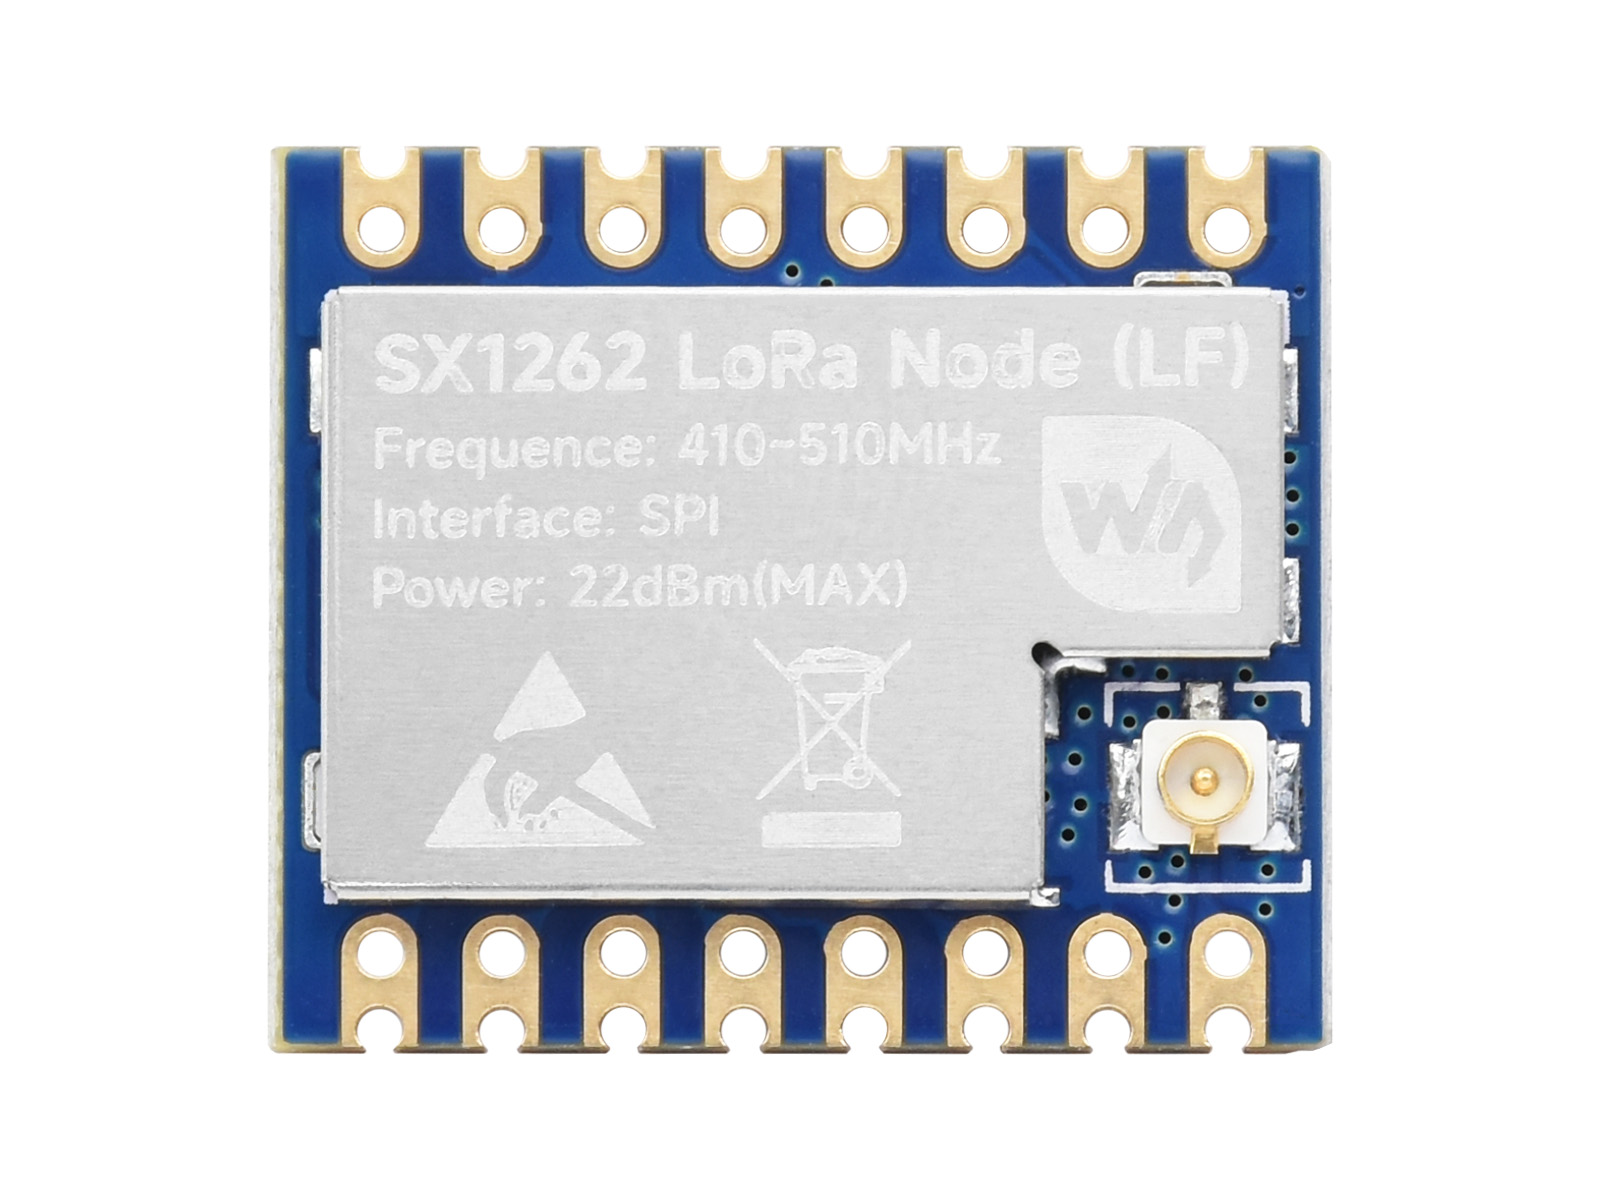 Core1262-LF LoRa模组 远距离通信 SX1262 抗干扰 LoRa 芯片模组 适用于 Sub-GHz LF 频段